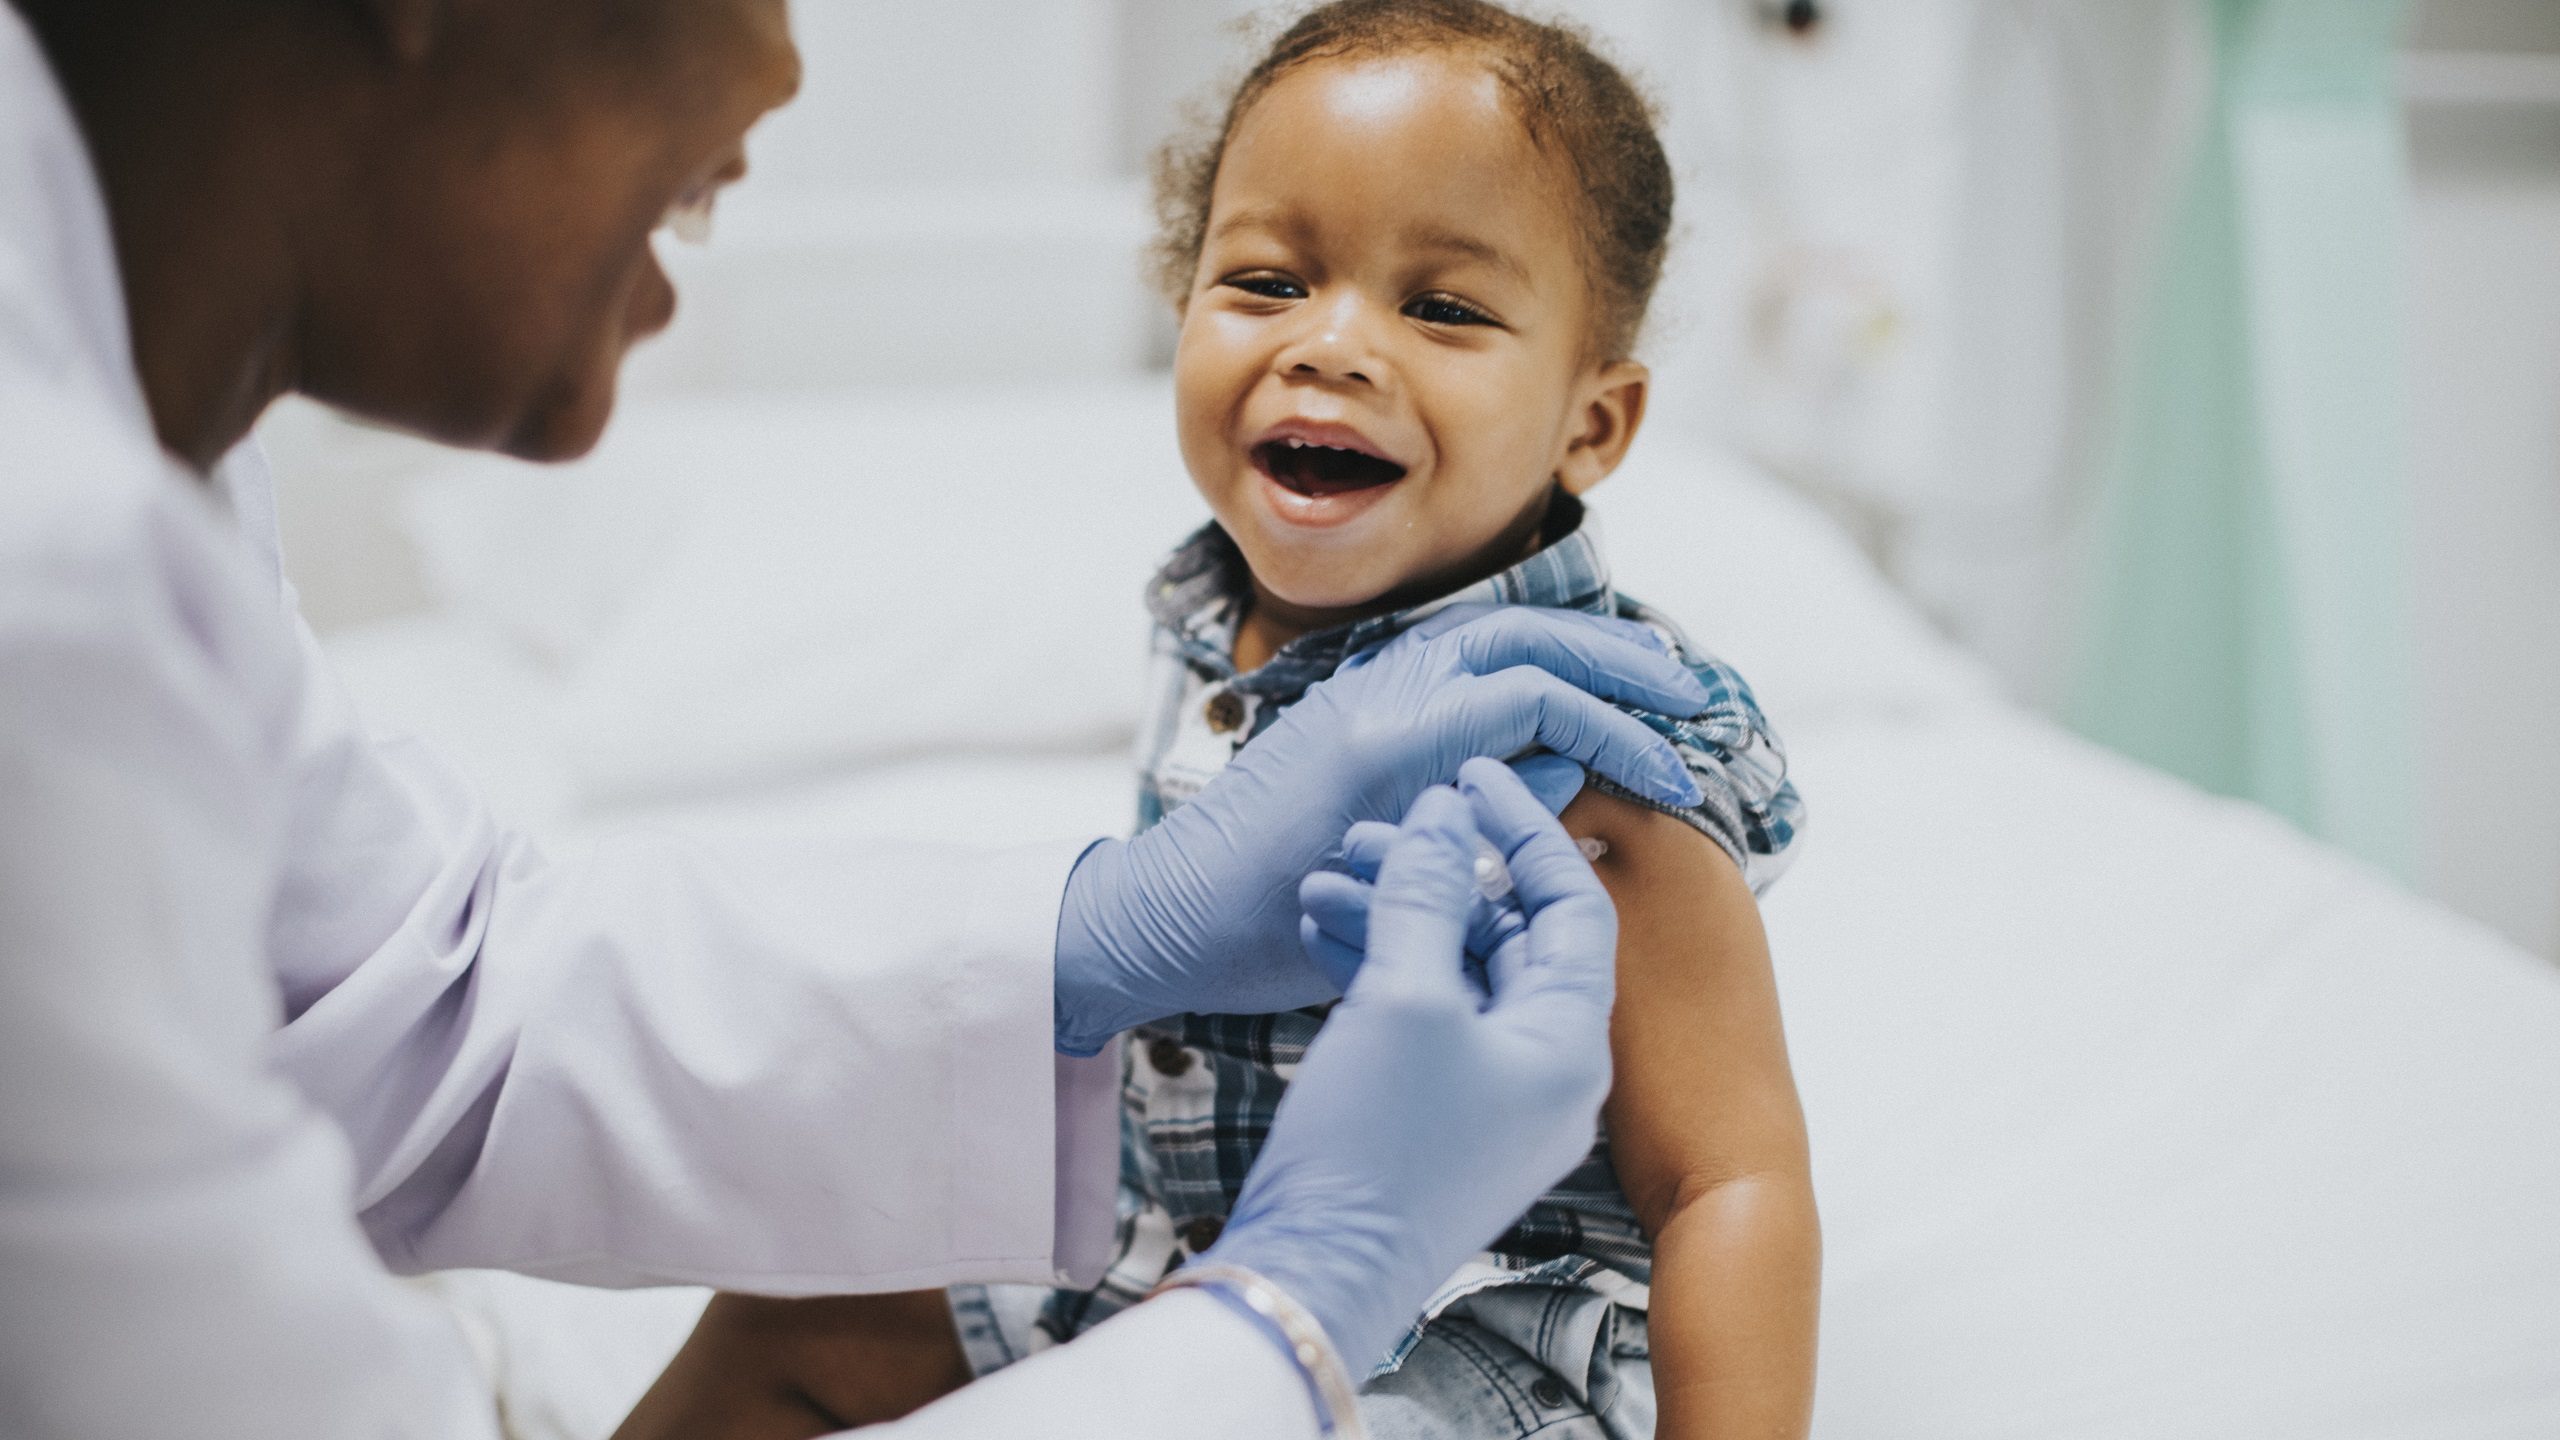 Jordan Takes Swift Action Against False Vaccine Claims Amid Parental Confusion